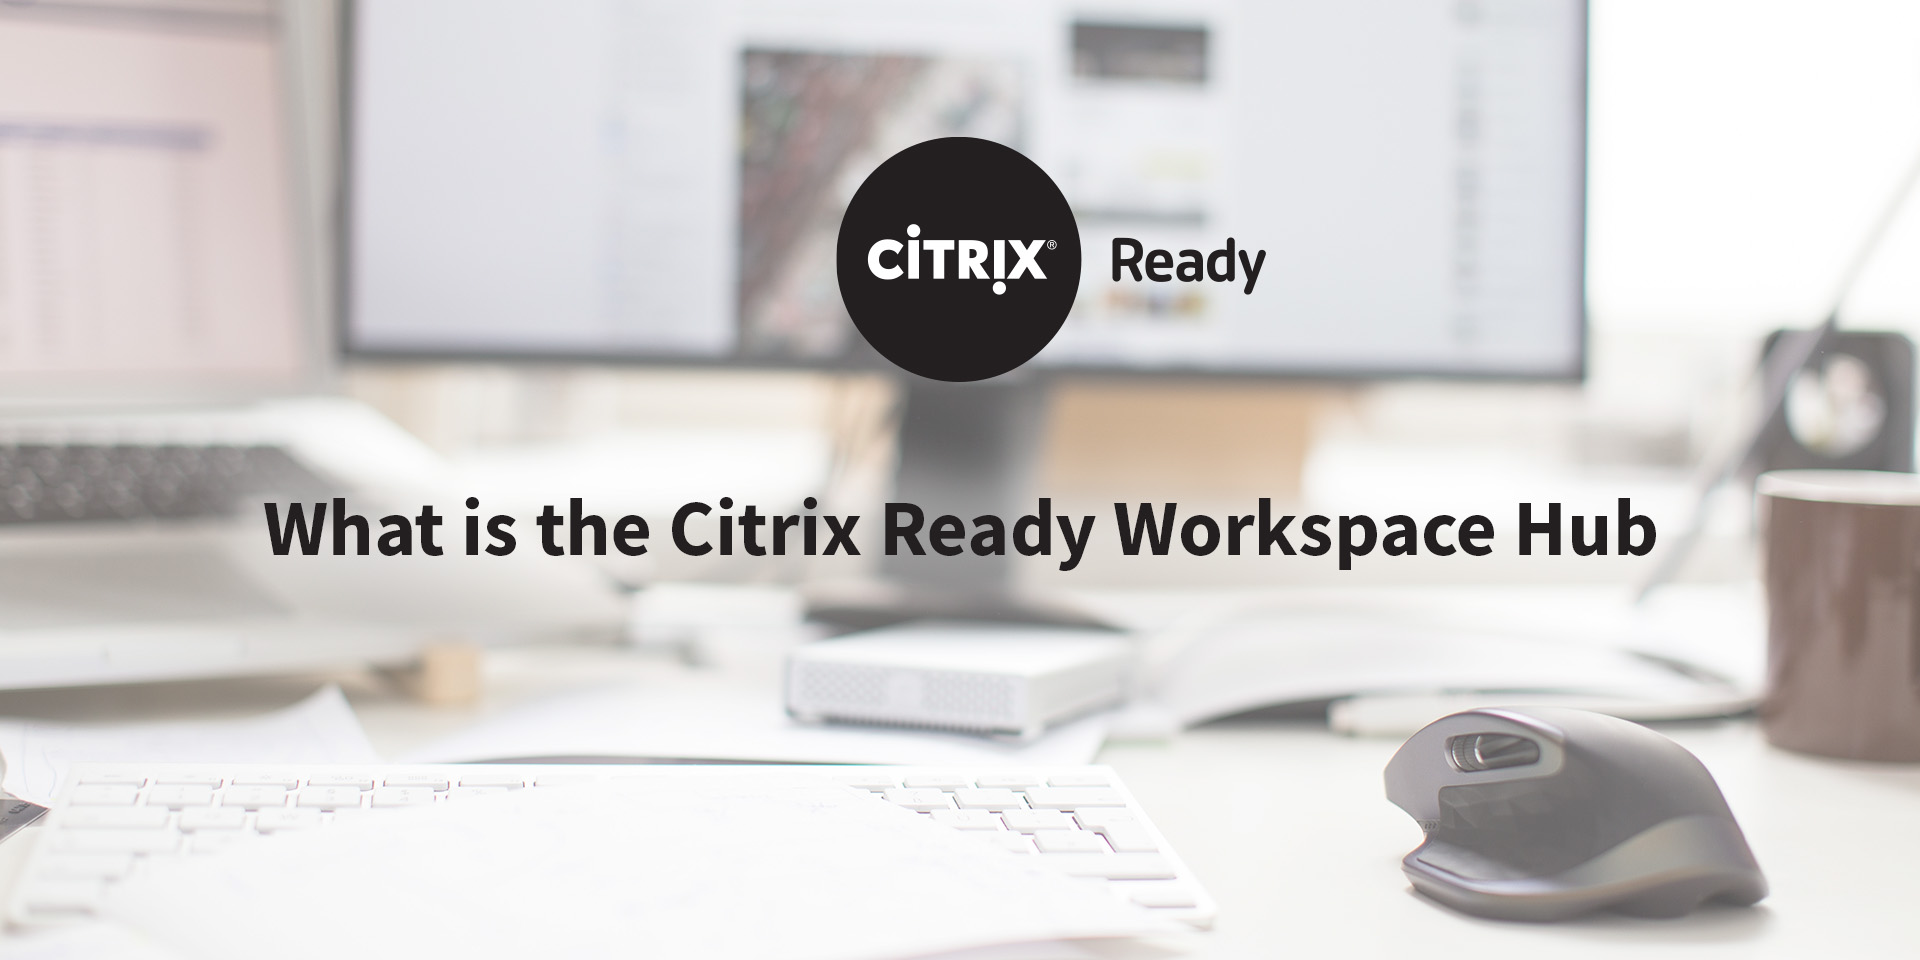 Citrix Ready Workspace Hub